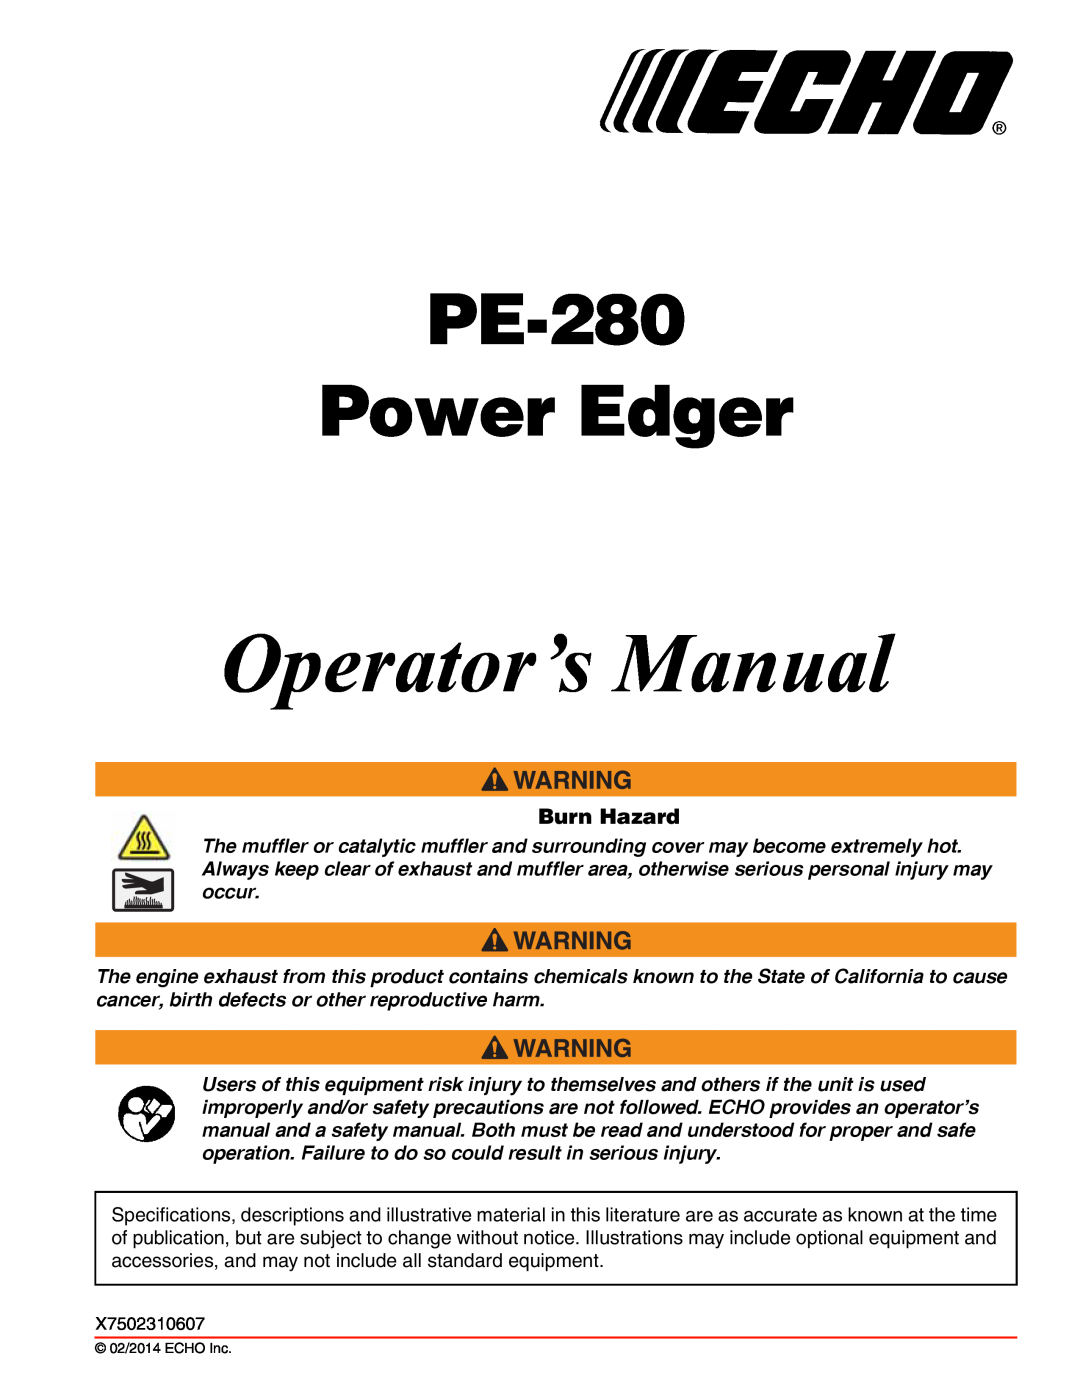 Echo specifications Burn Hazard, Operator’s Manual, PE-280 Power Edger 